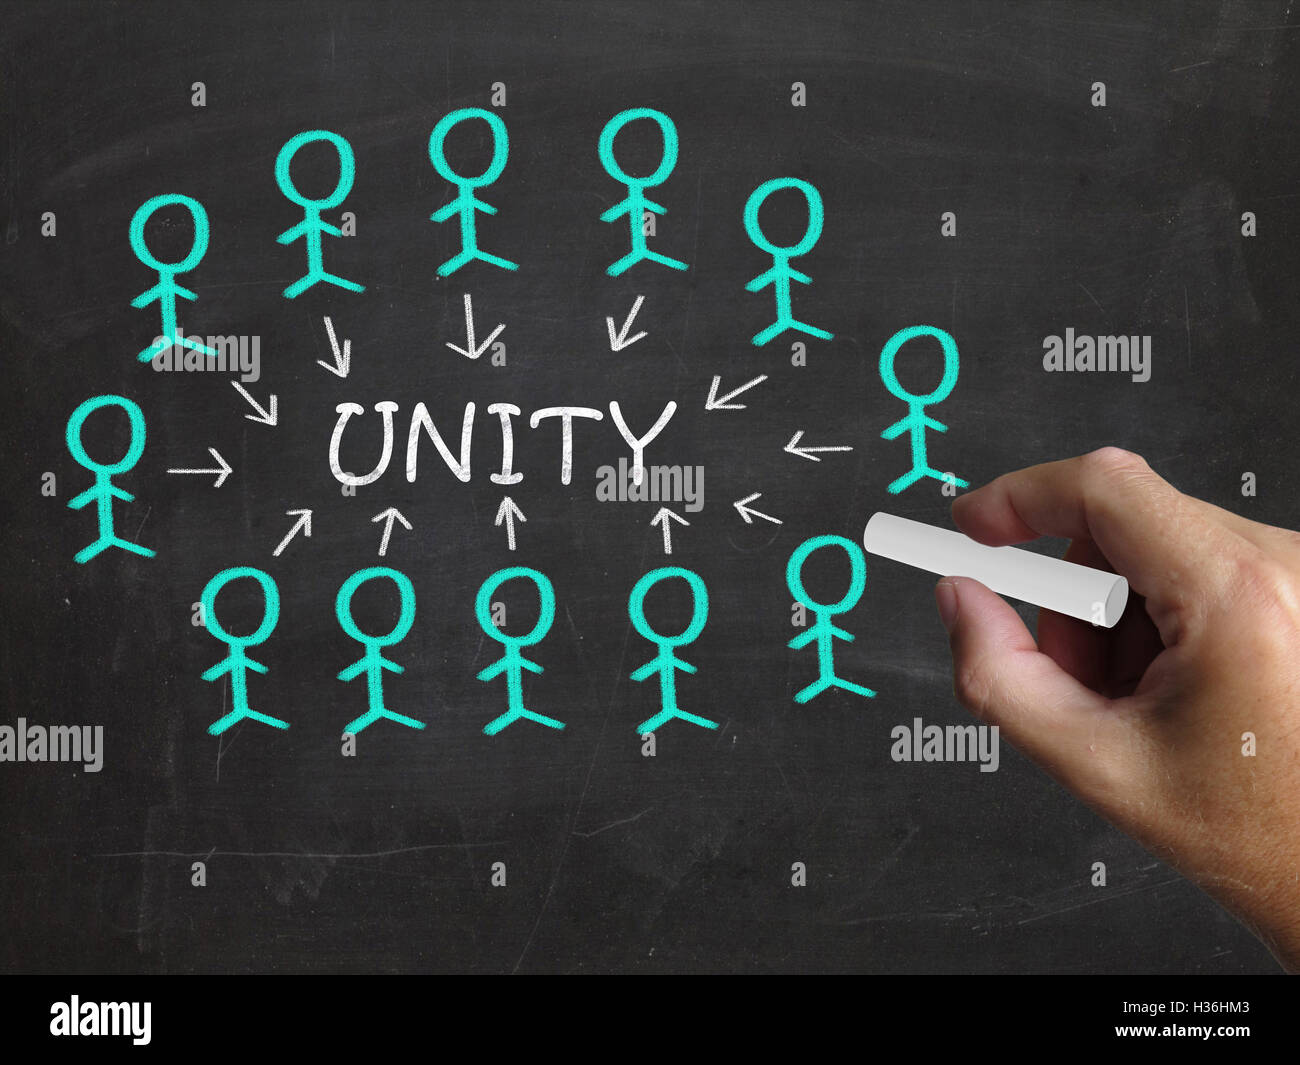 Unity On Blackboard Shows Partner Unity Or Cooperation Stock Photo